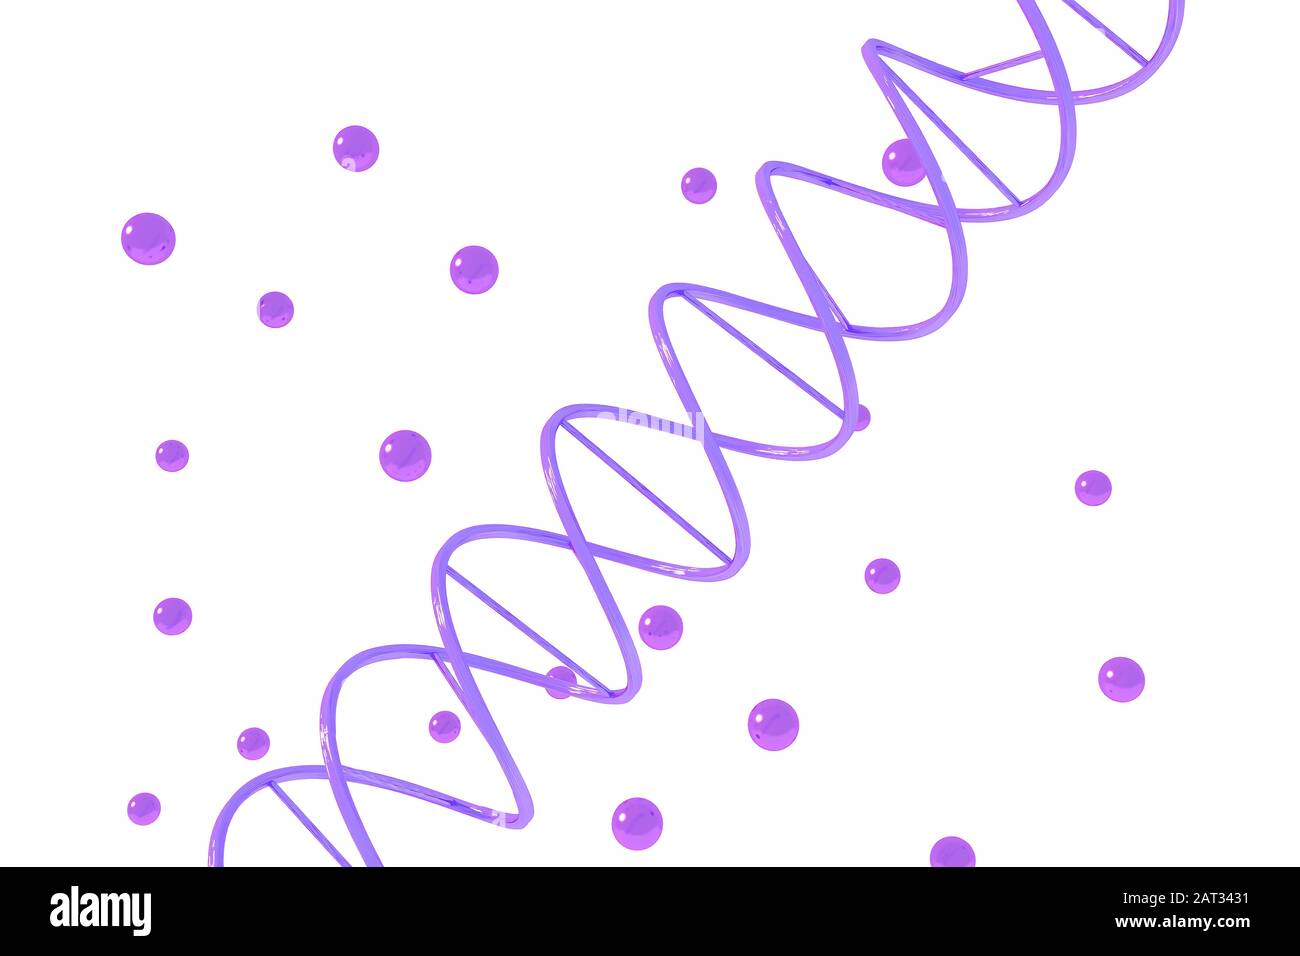 3D-Rendering der DNA-Struktur (Desoxyribonukleinsäure), 3D-Abbildung. Stockfoto